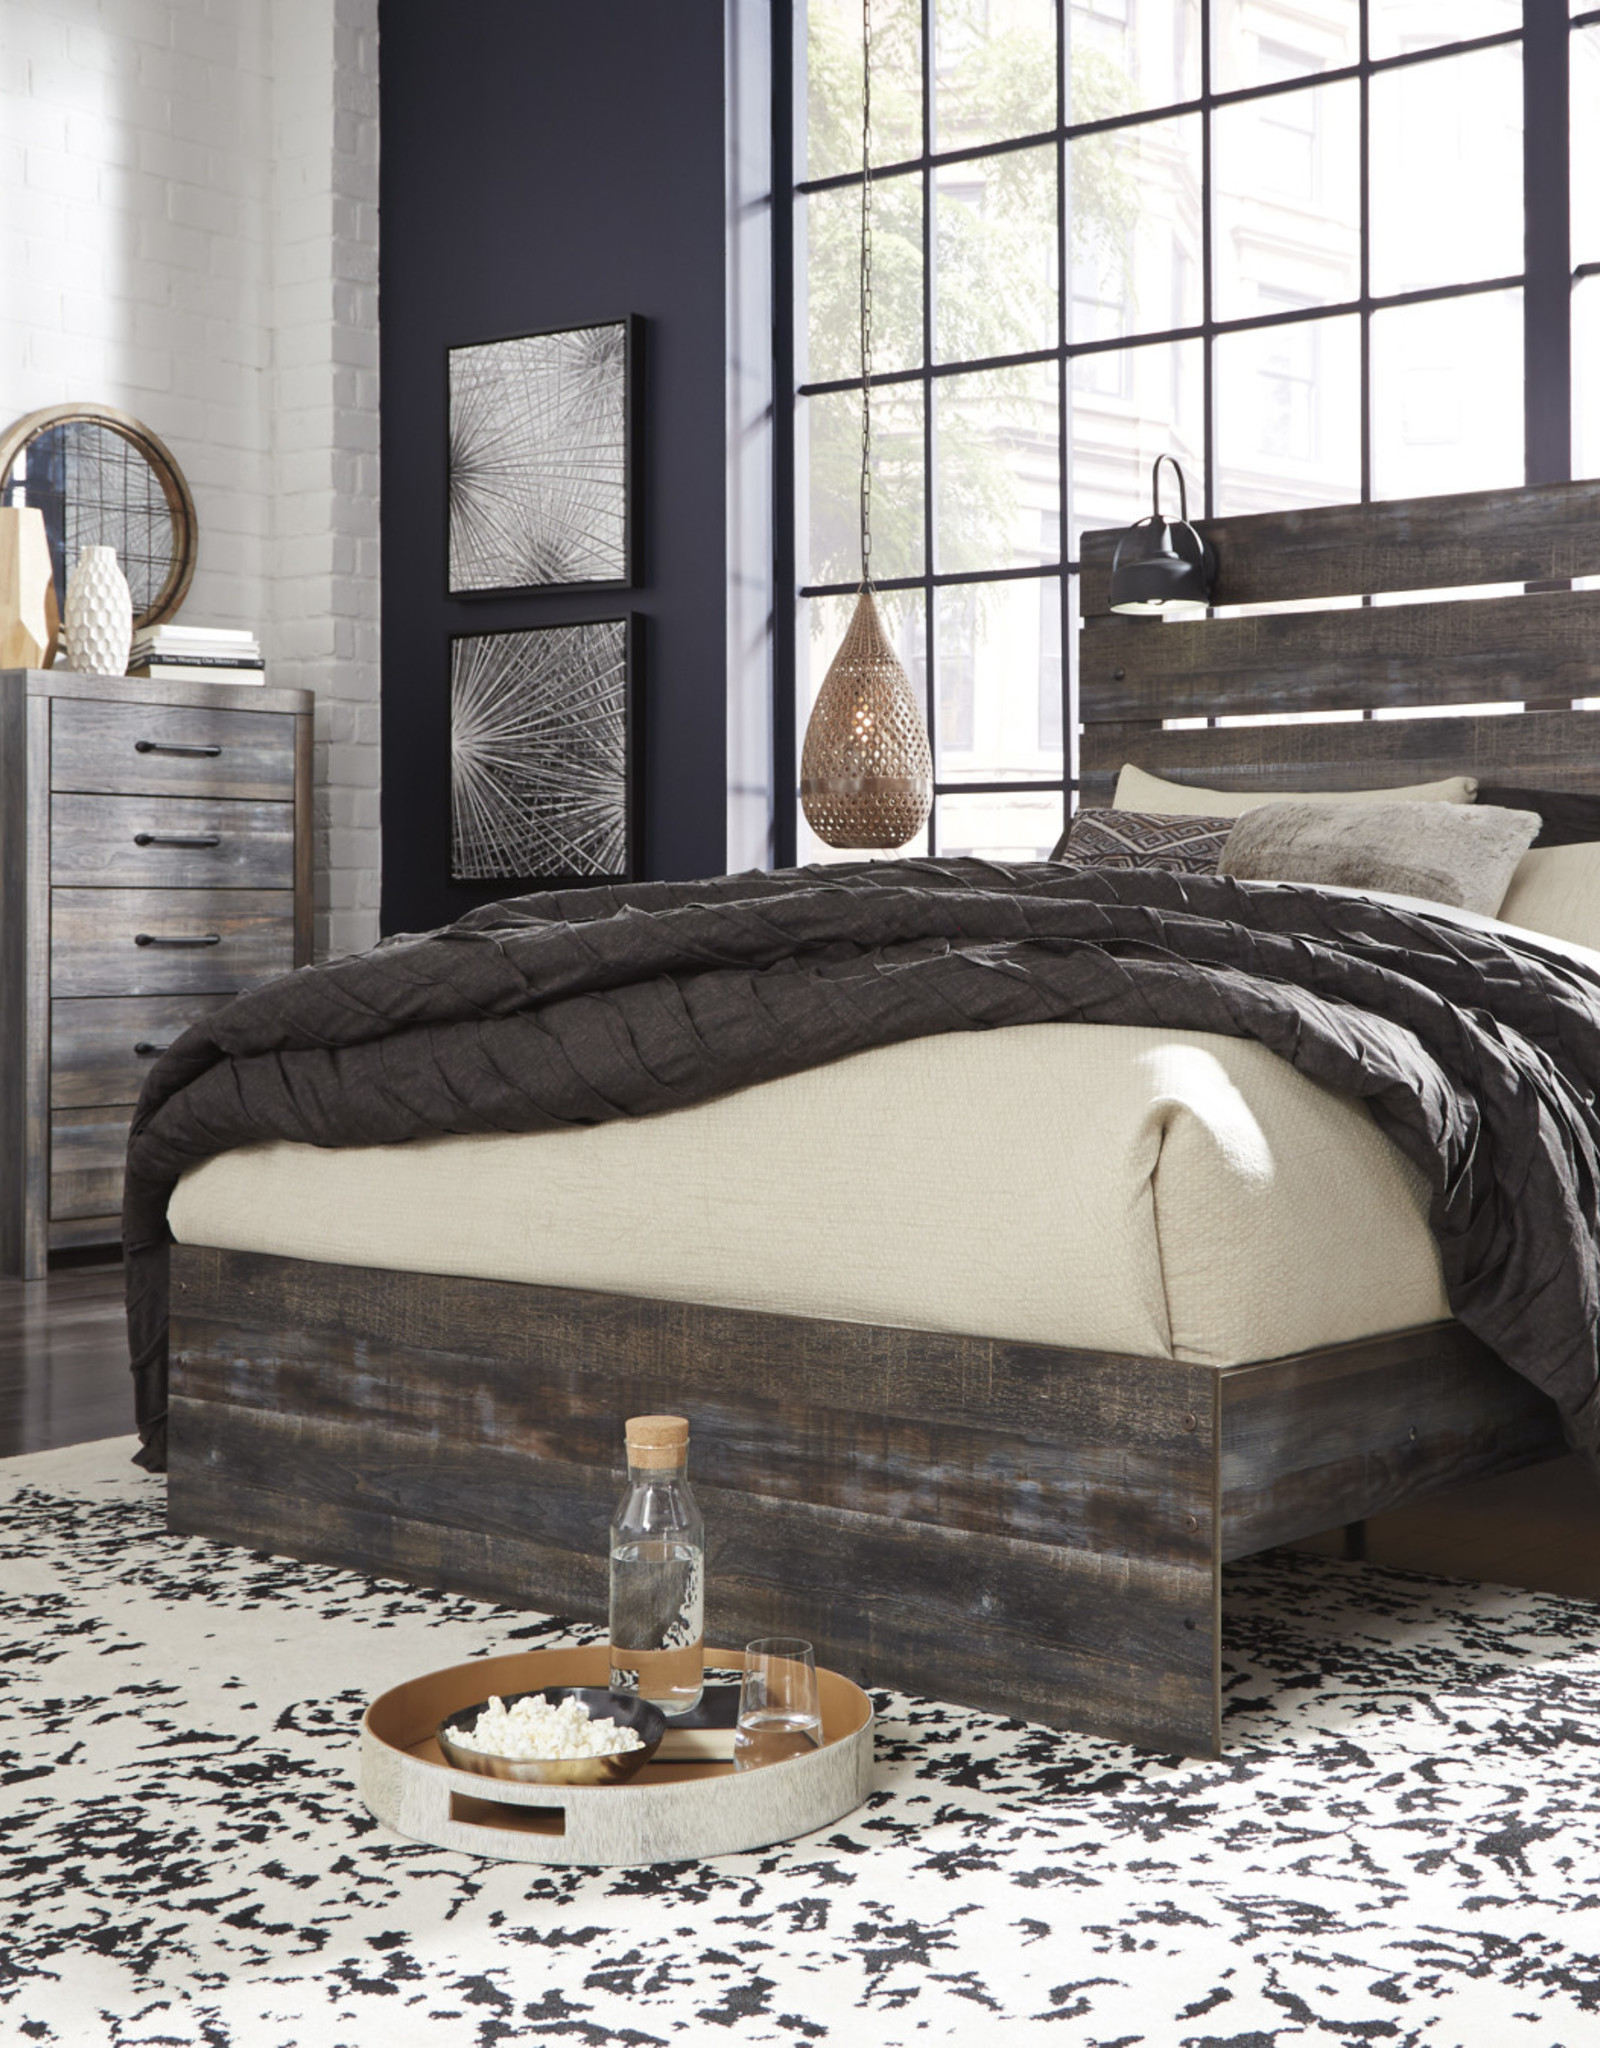 Drystan Bed (Includes headboard, footboard, and rails)